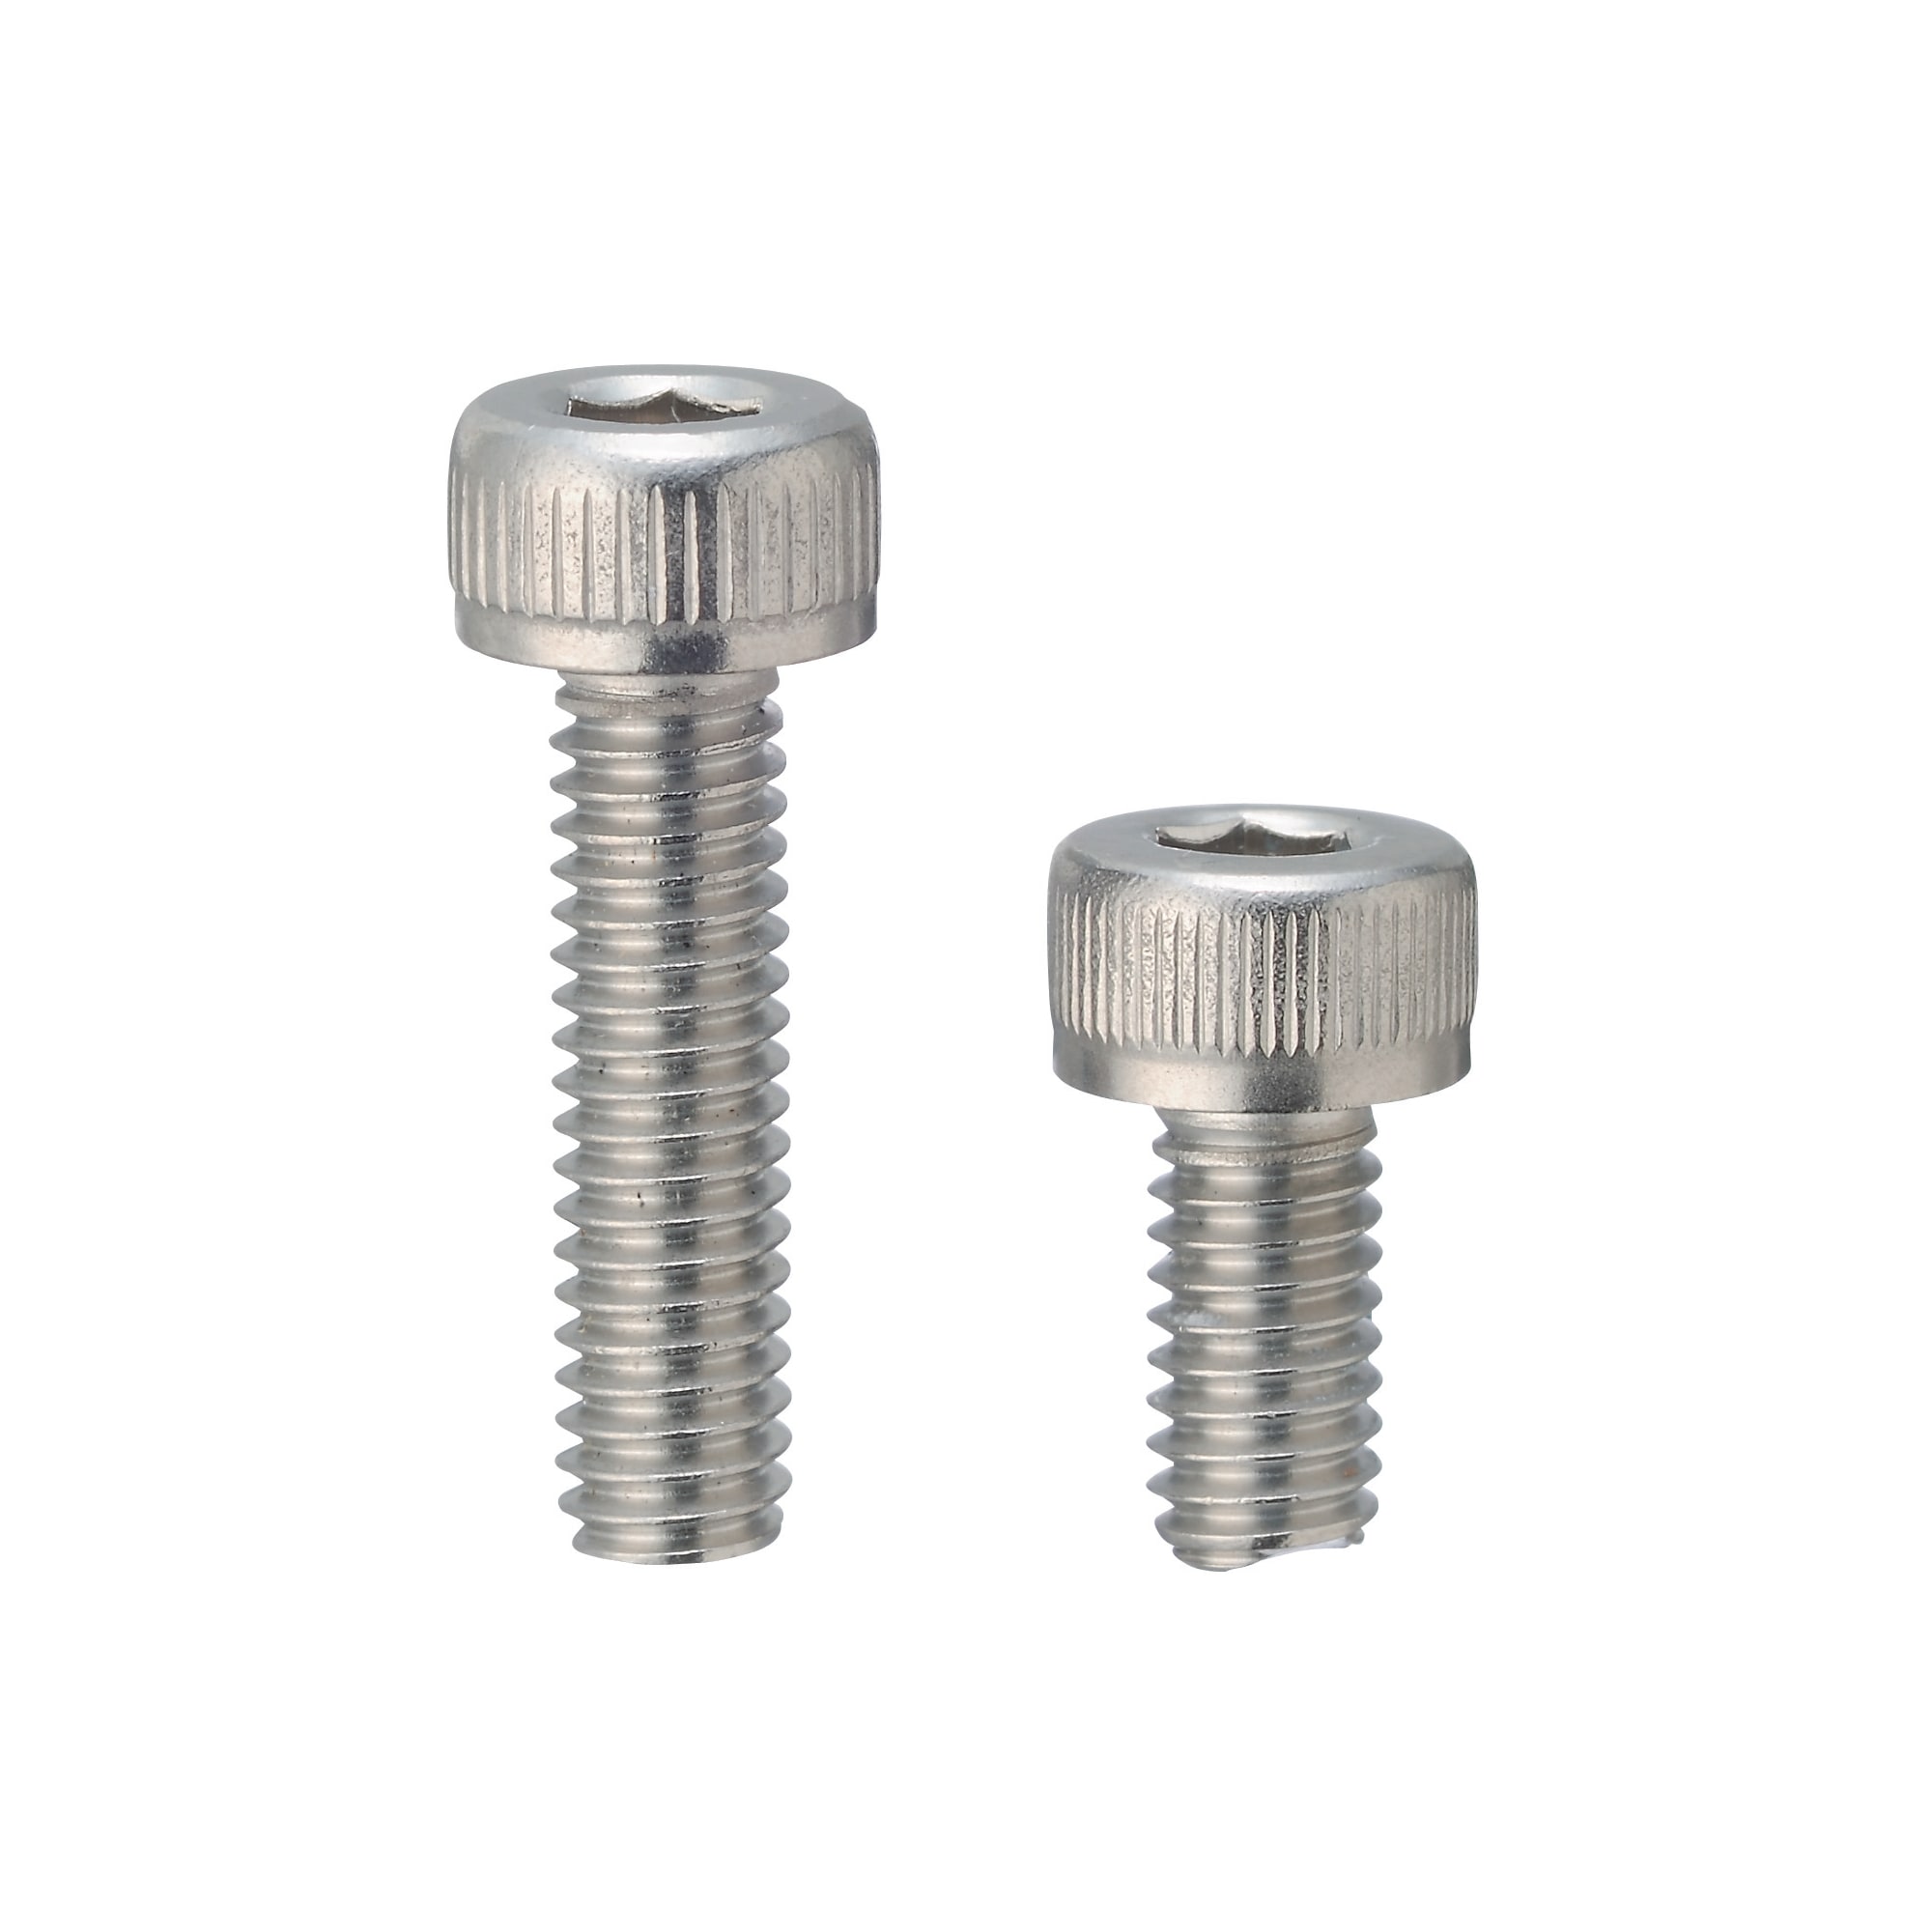 600pcs Small Screws Nuts Stainless Steel M1 M1.2 M1.4 M1.6 Set Kit Repair Box V1 